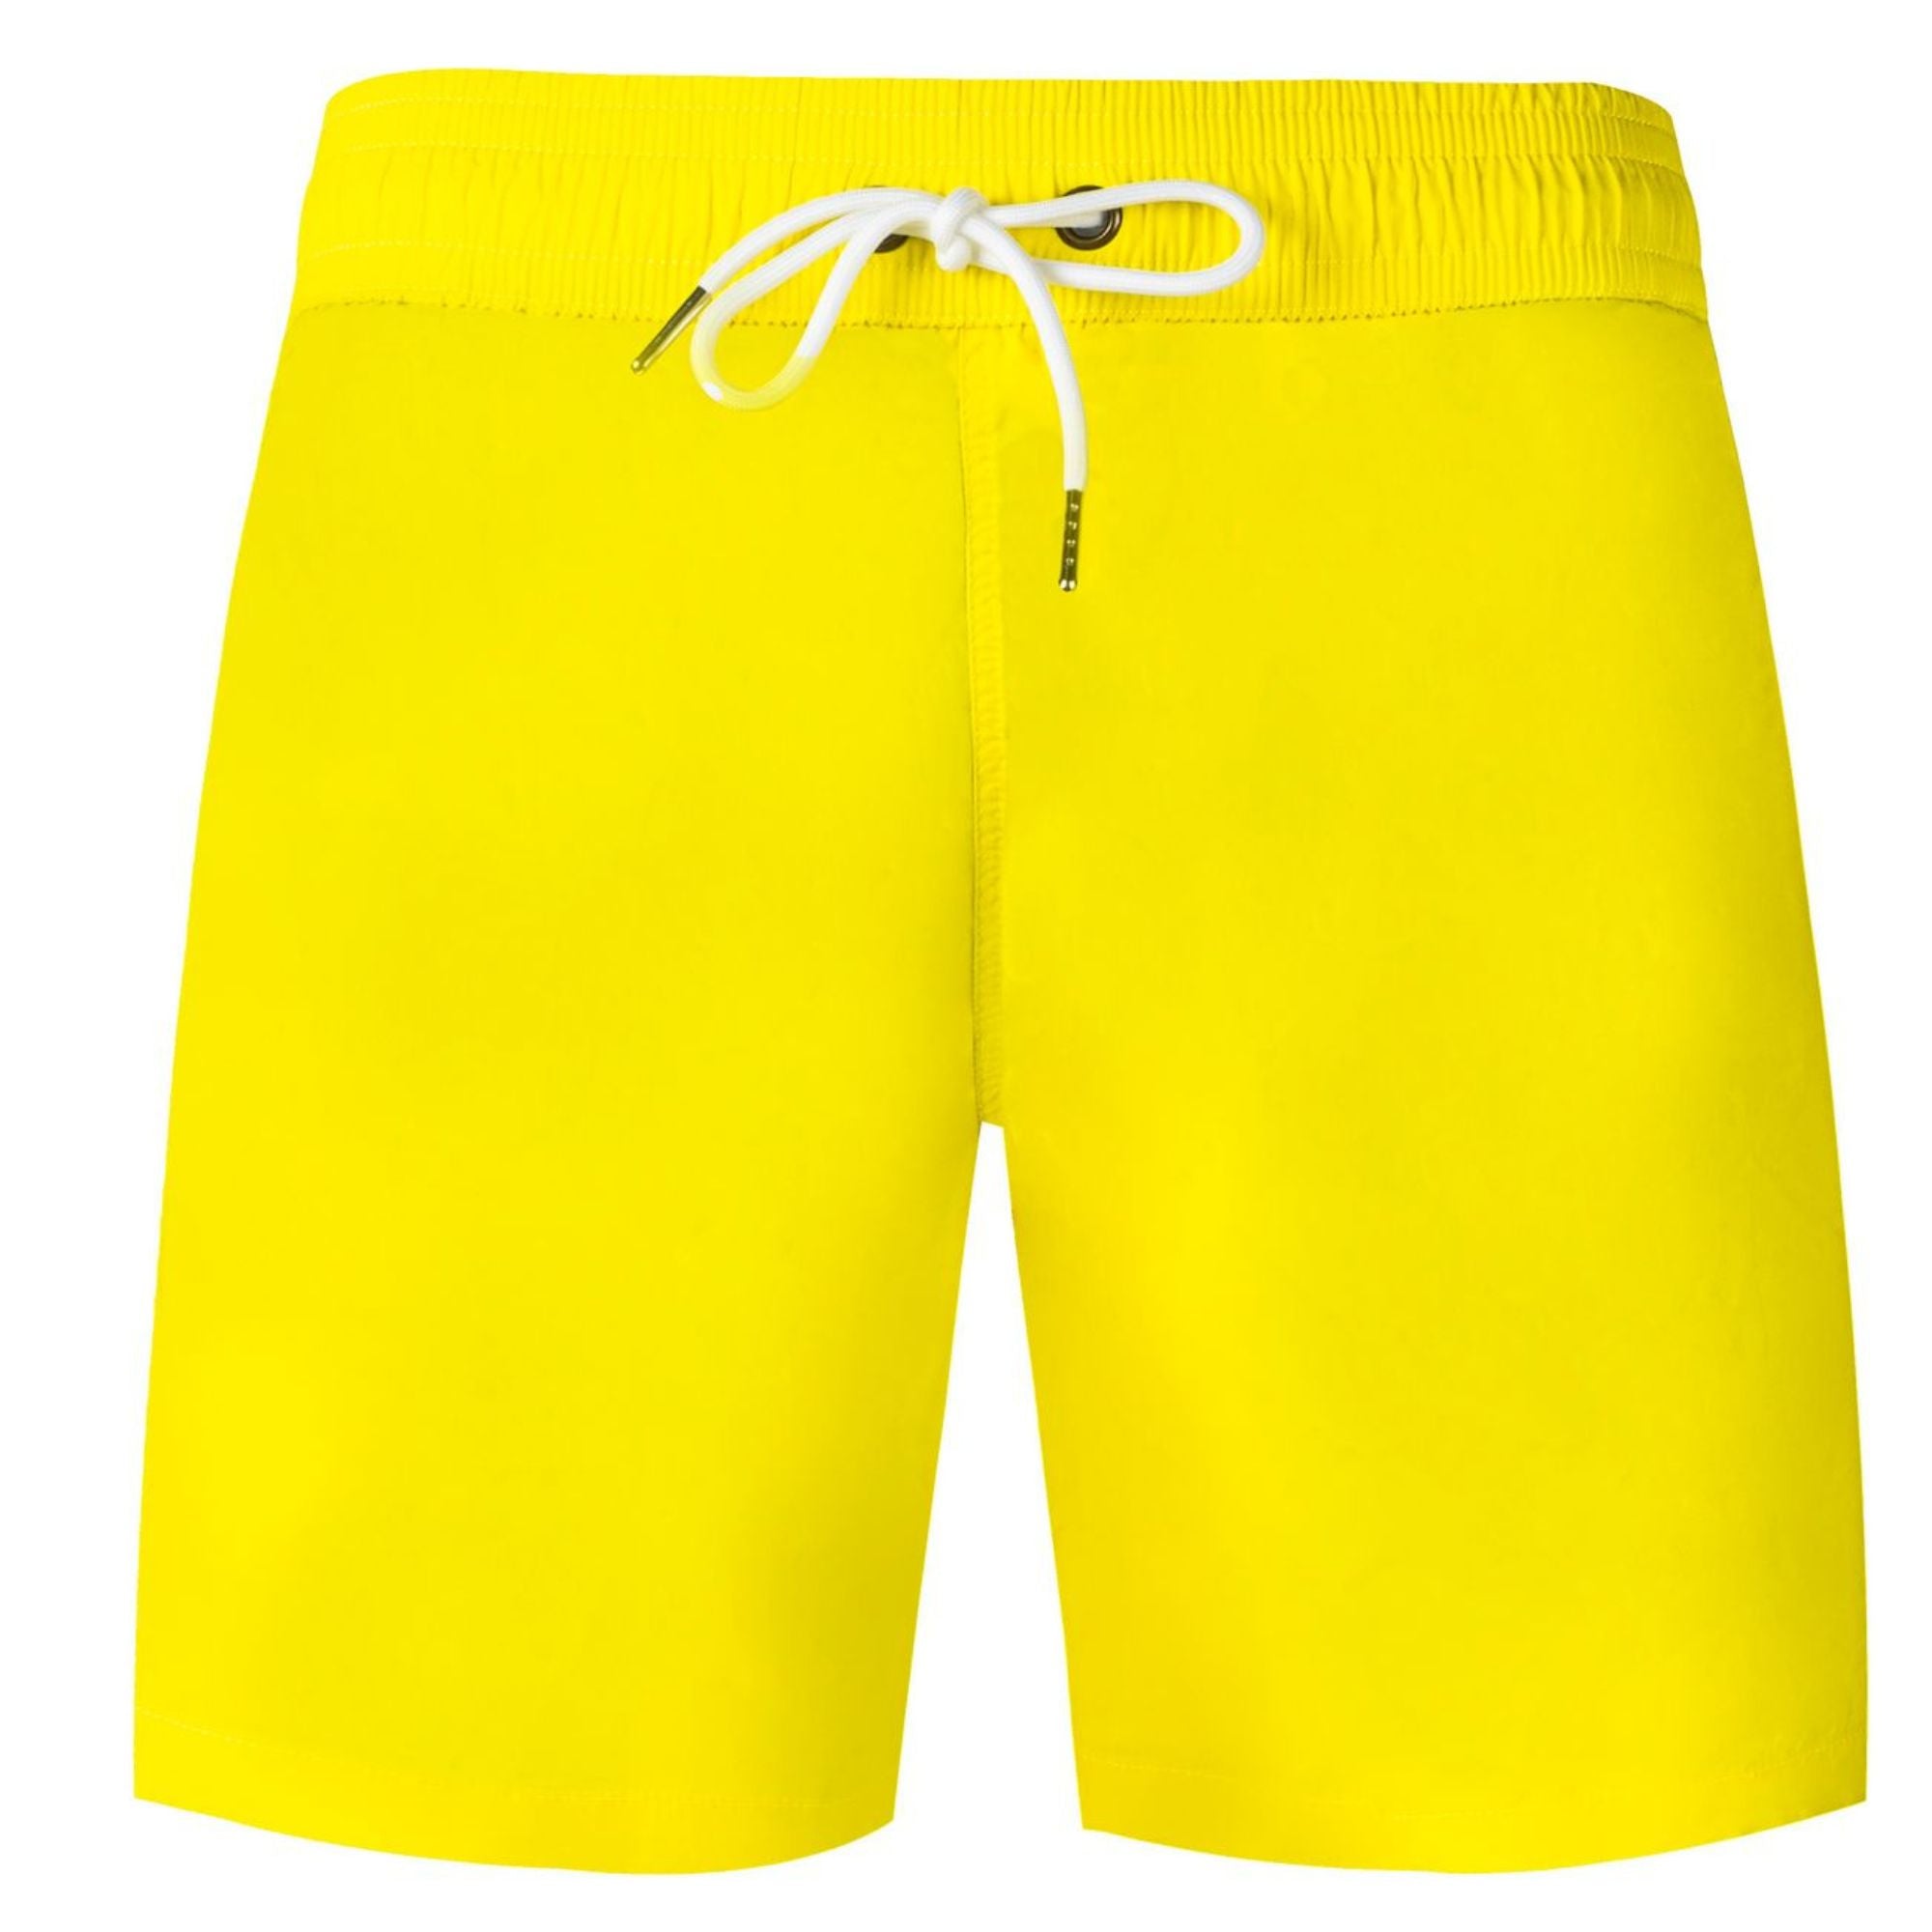 Shorts Yellow